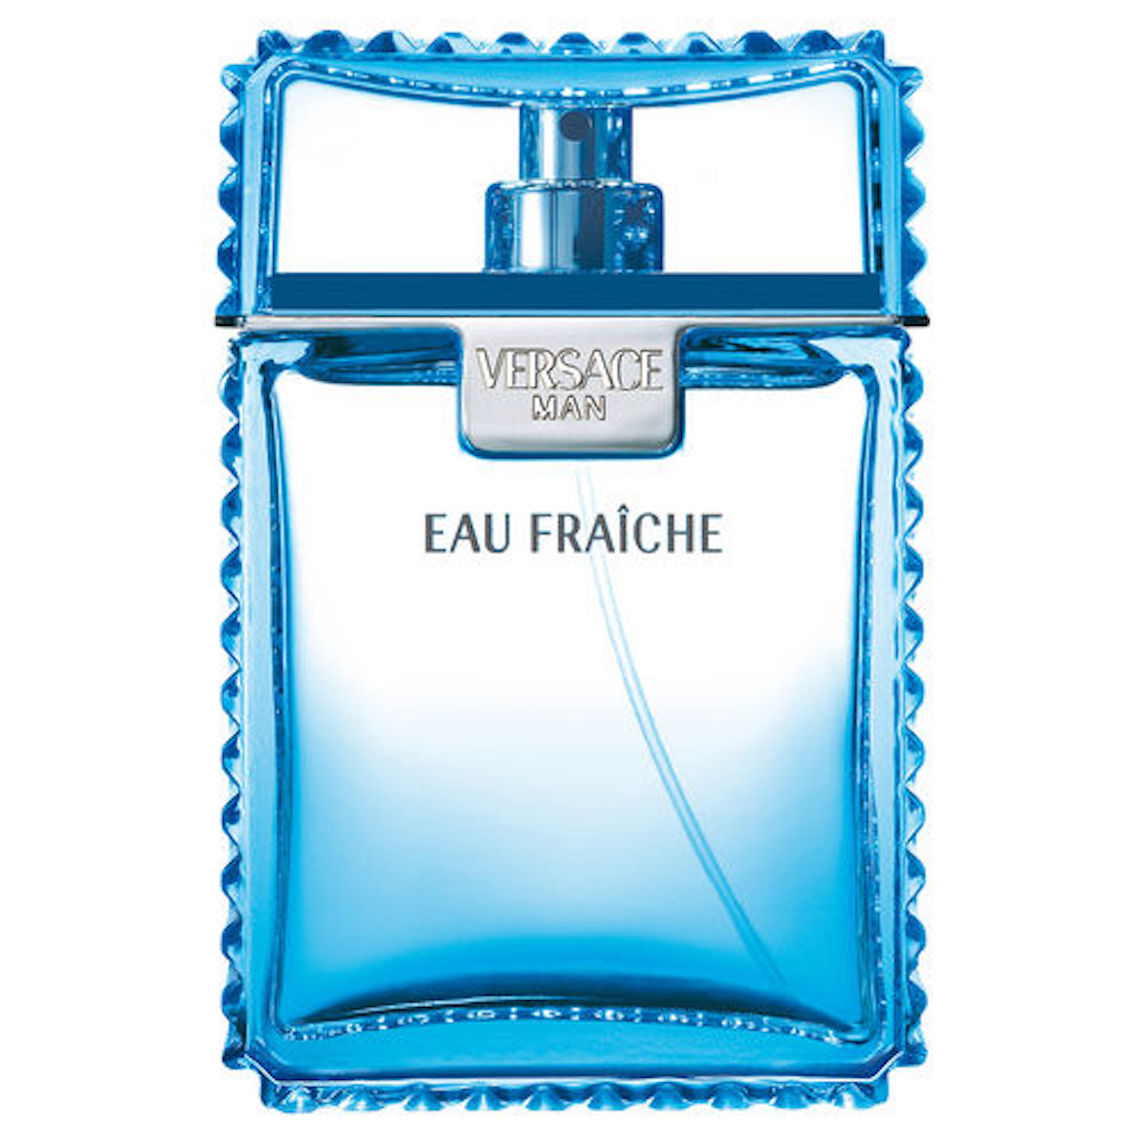 Bottle of Versace Man Eau Fraiche